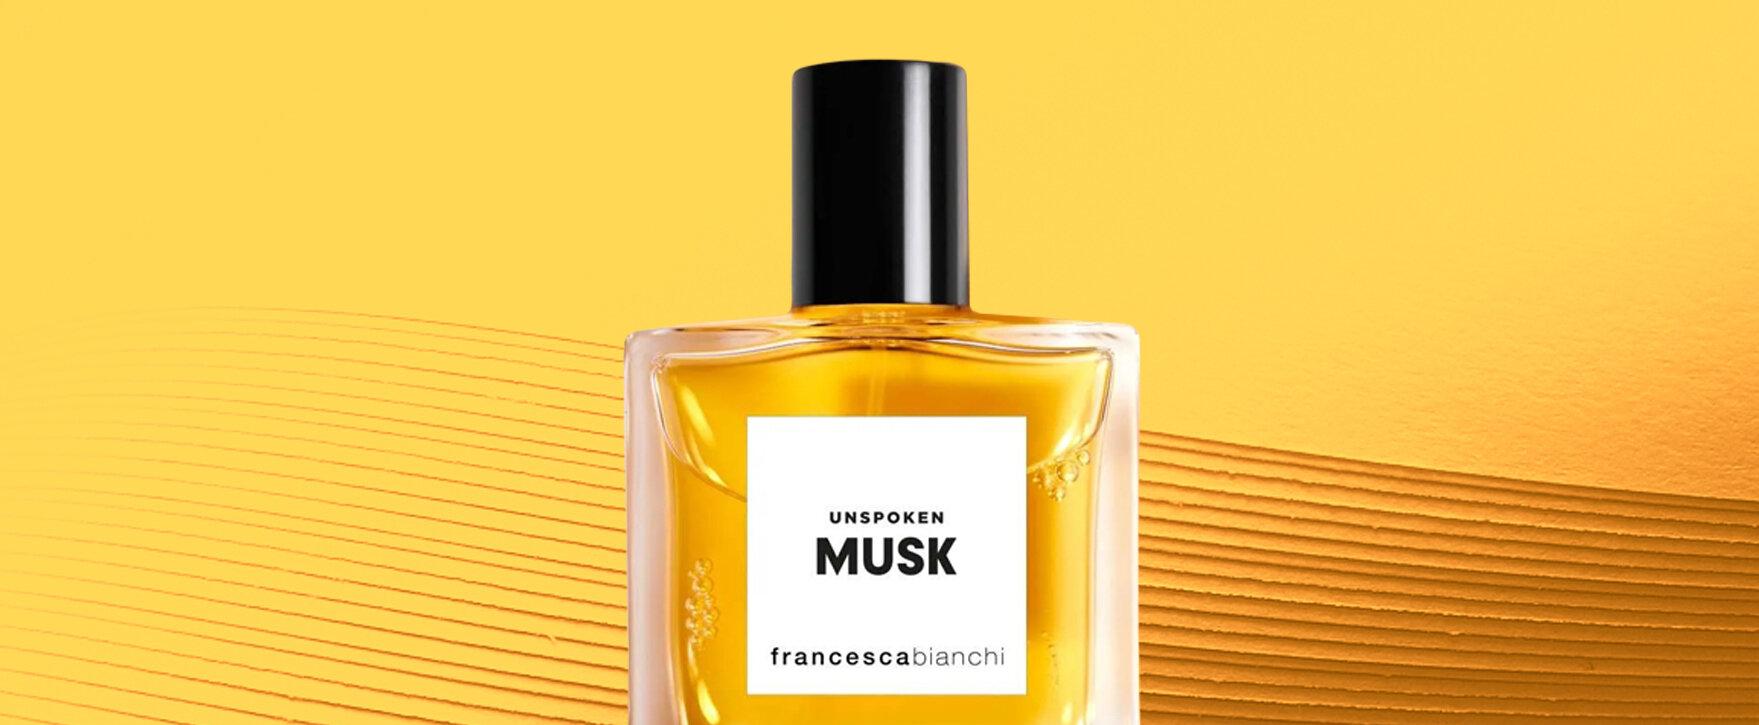 “Unspoken Musk” - Francesca Bianchi Introduces New Perfume